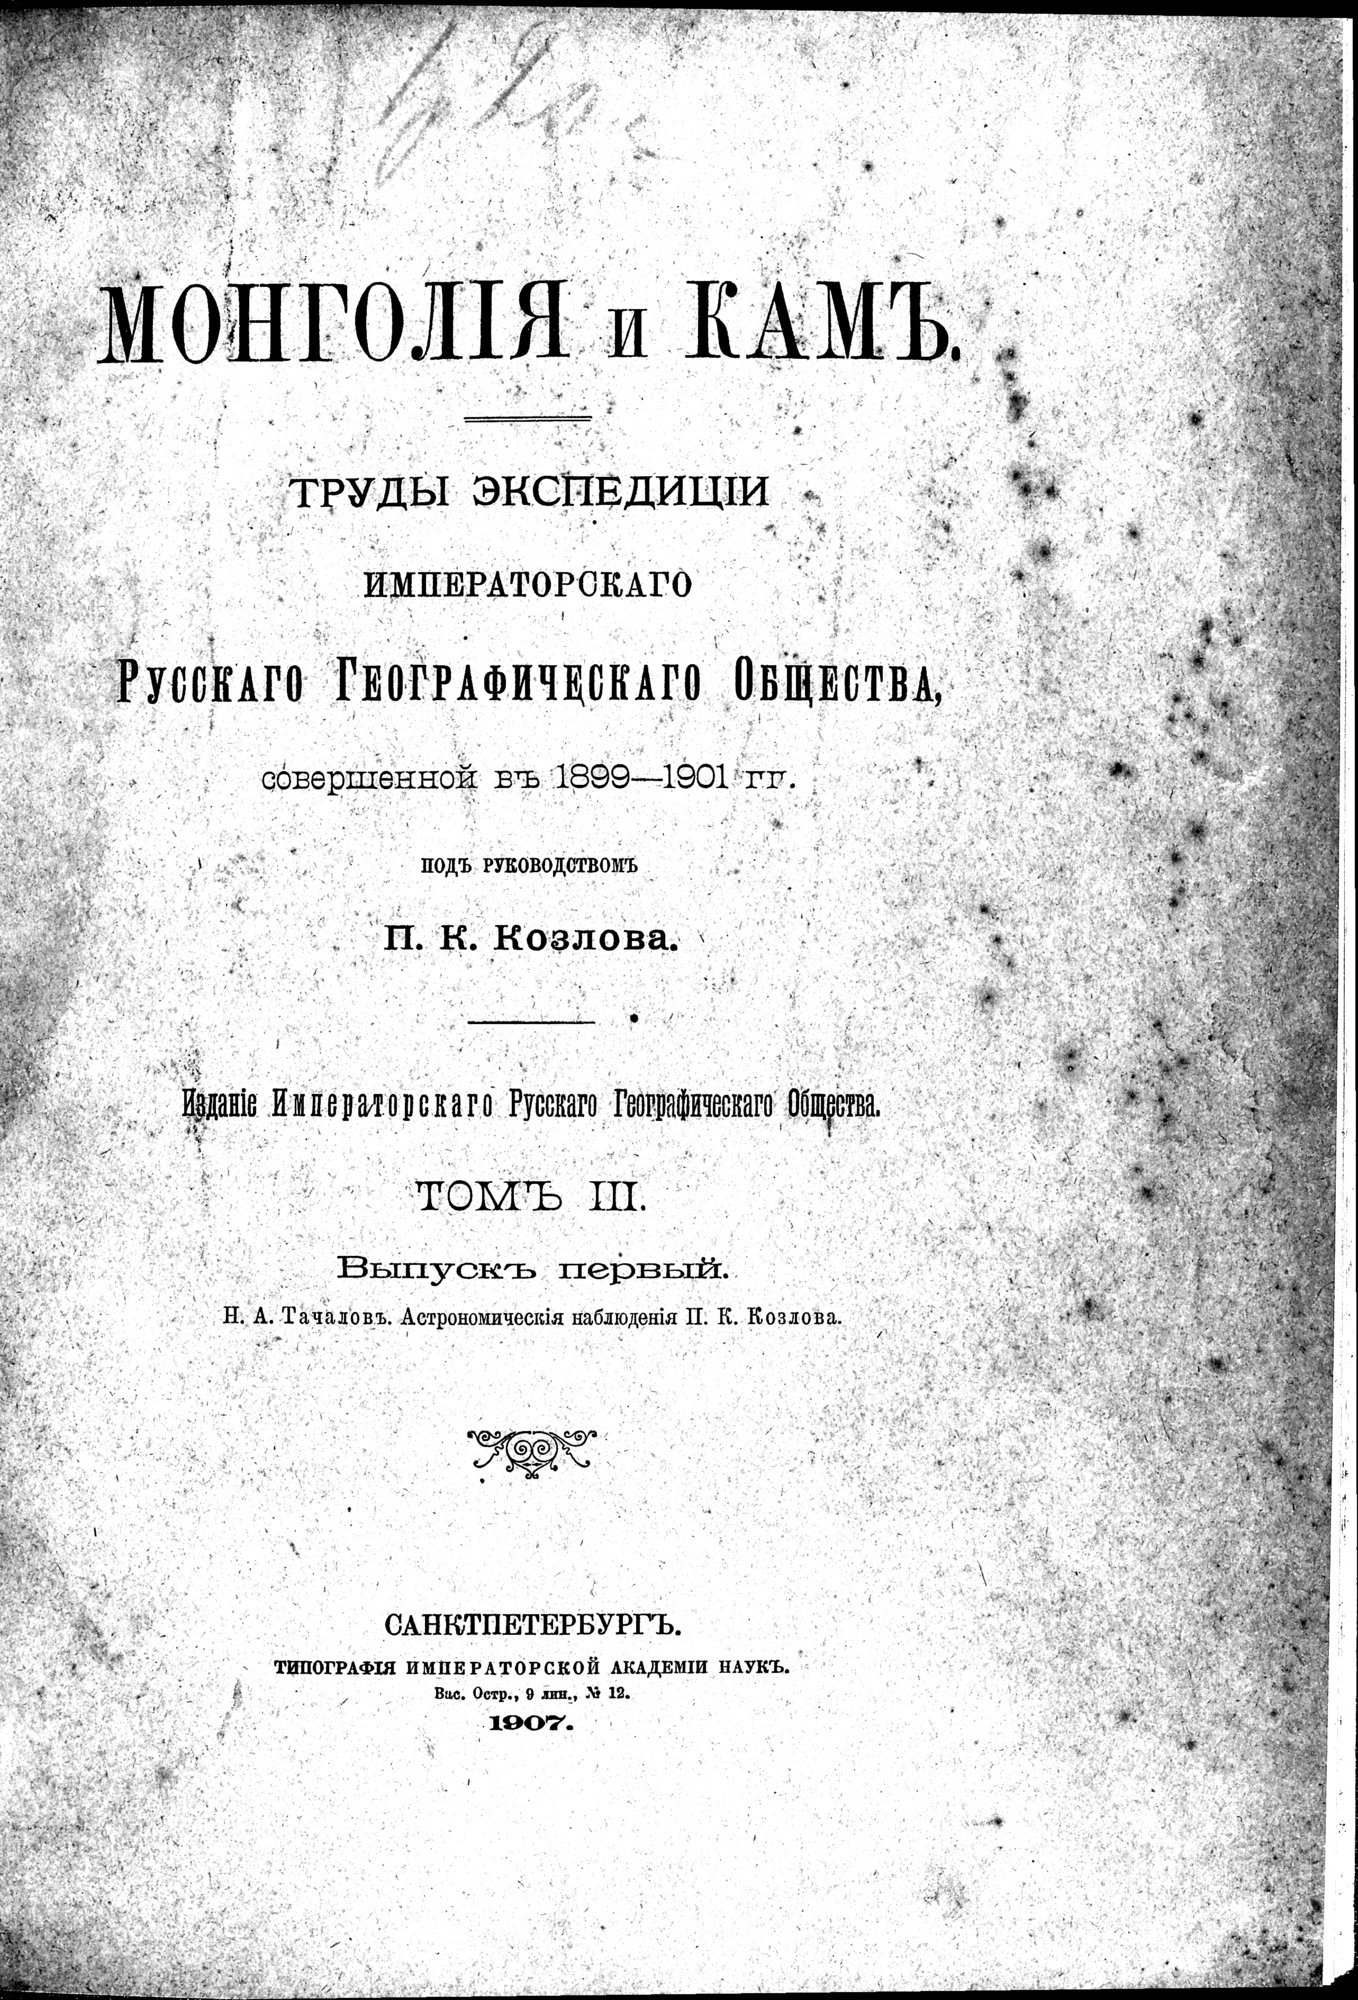 Mongoliia i Kam : vol.4 / 7 ページ（白黒高解像度画像）